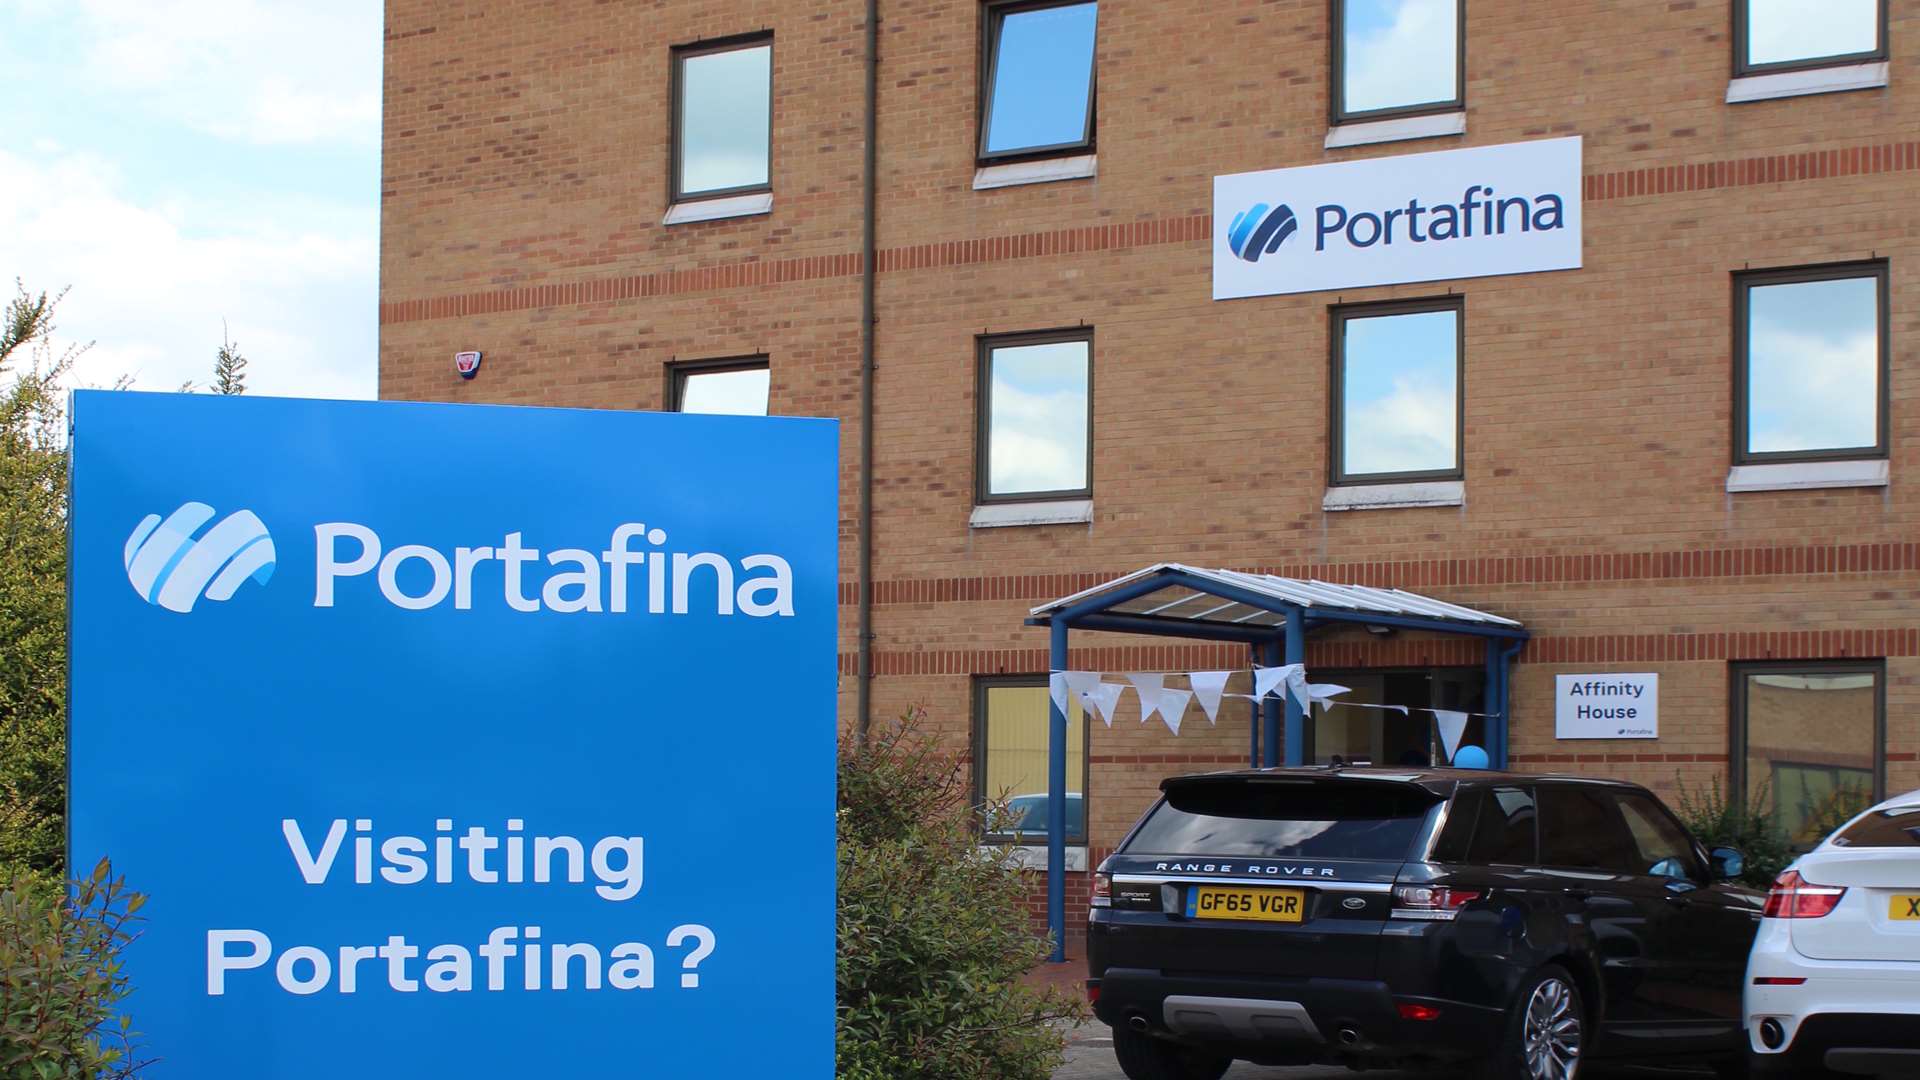 Pension advice business Portal Financial has rebranded to Portafina